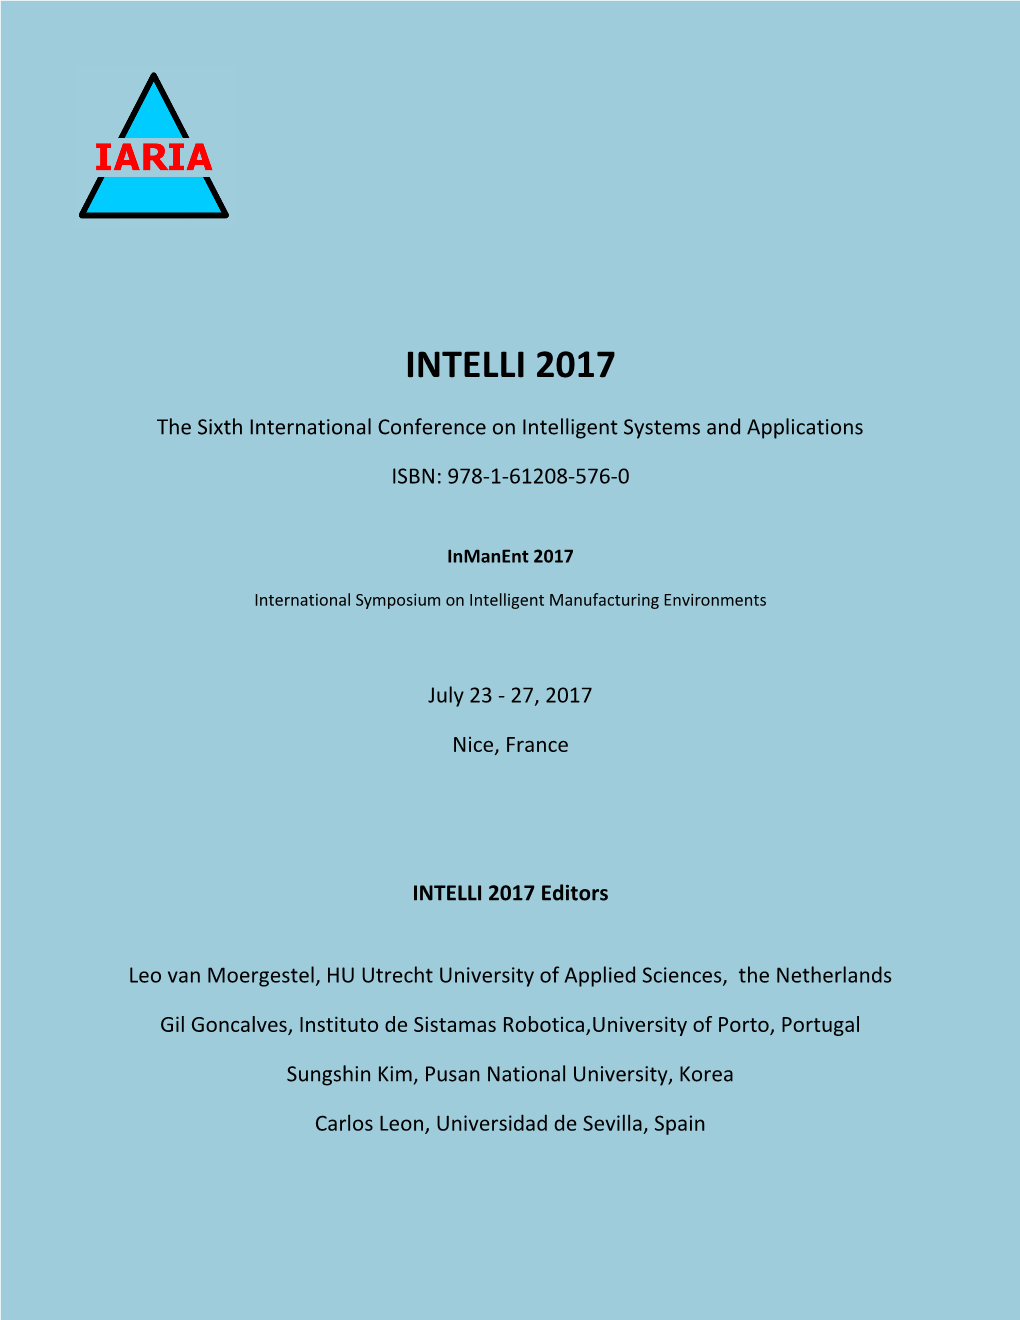 INTELLI 2017 Proceedings